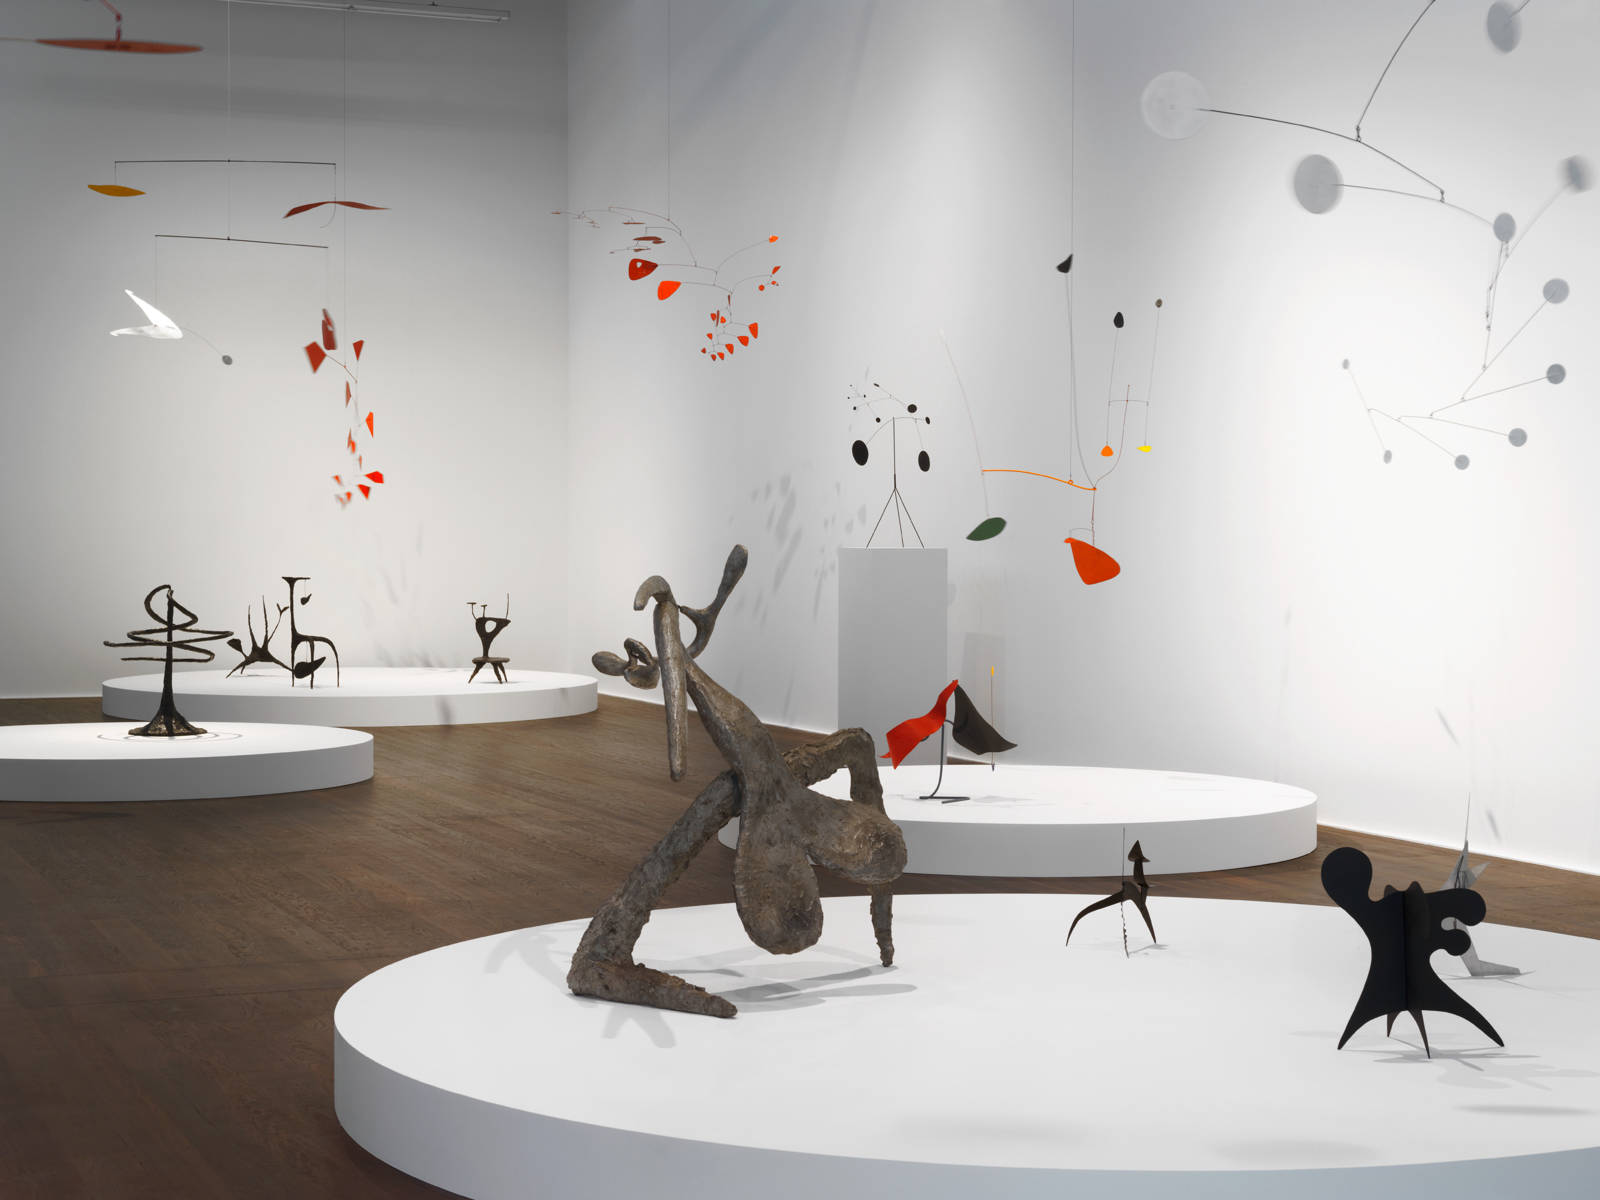 Alexander Calder / Francis Picabia / "Transparence", exhibition view / 2015